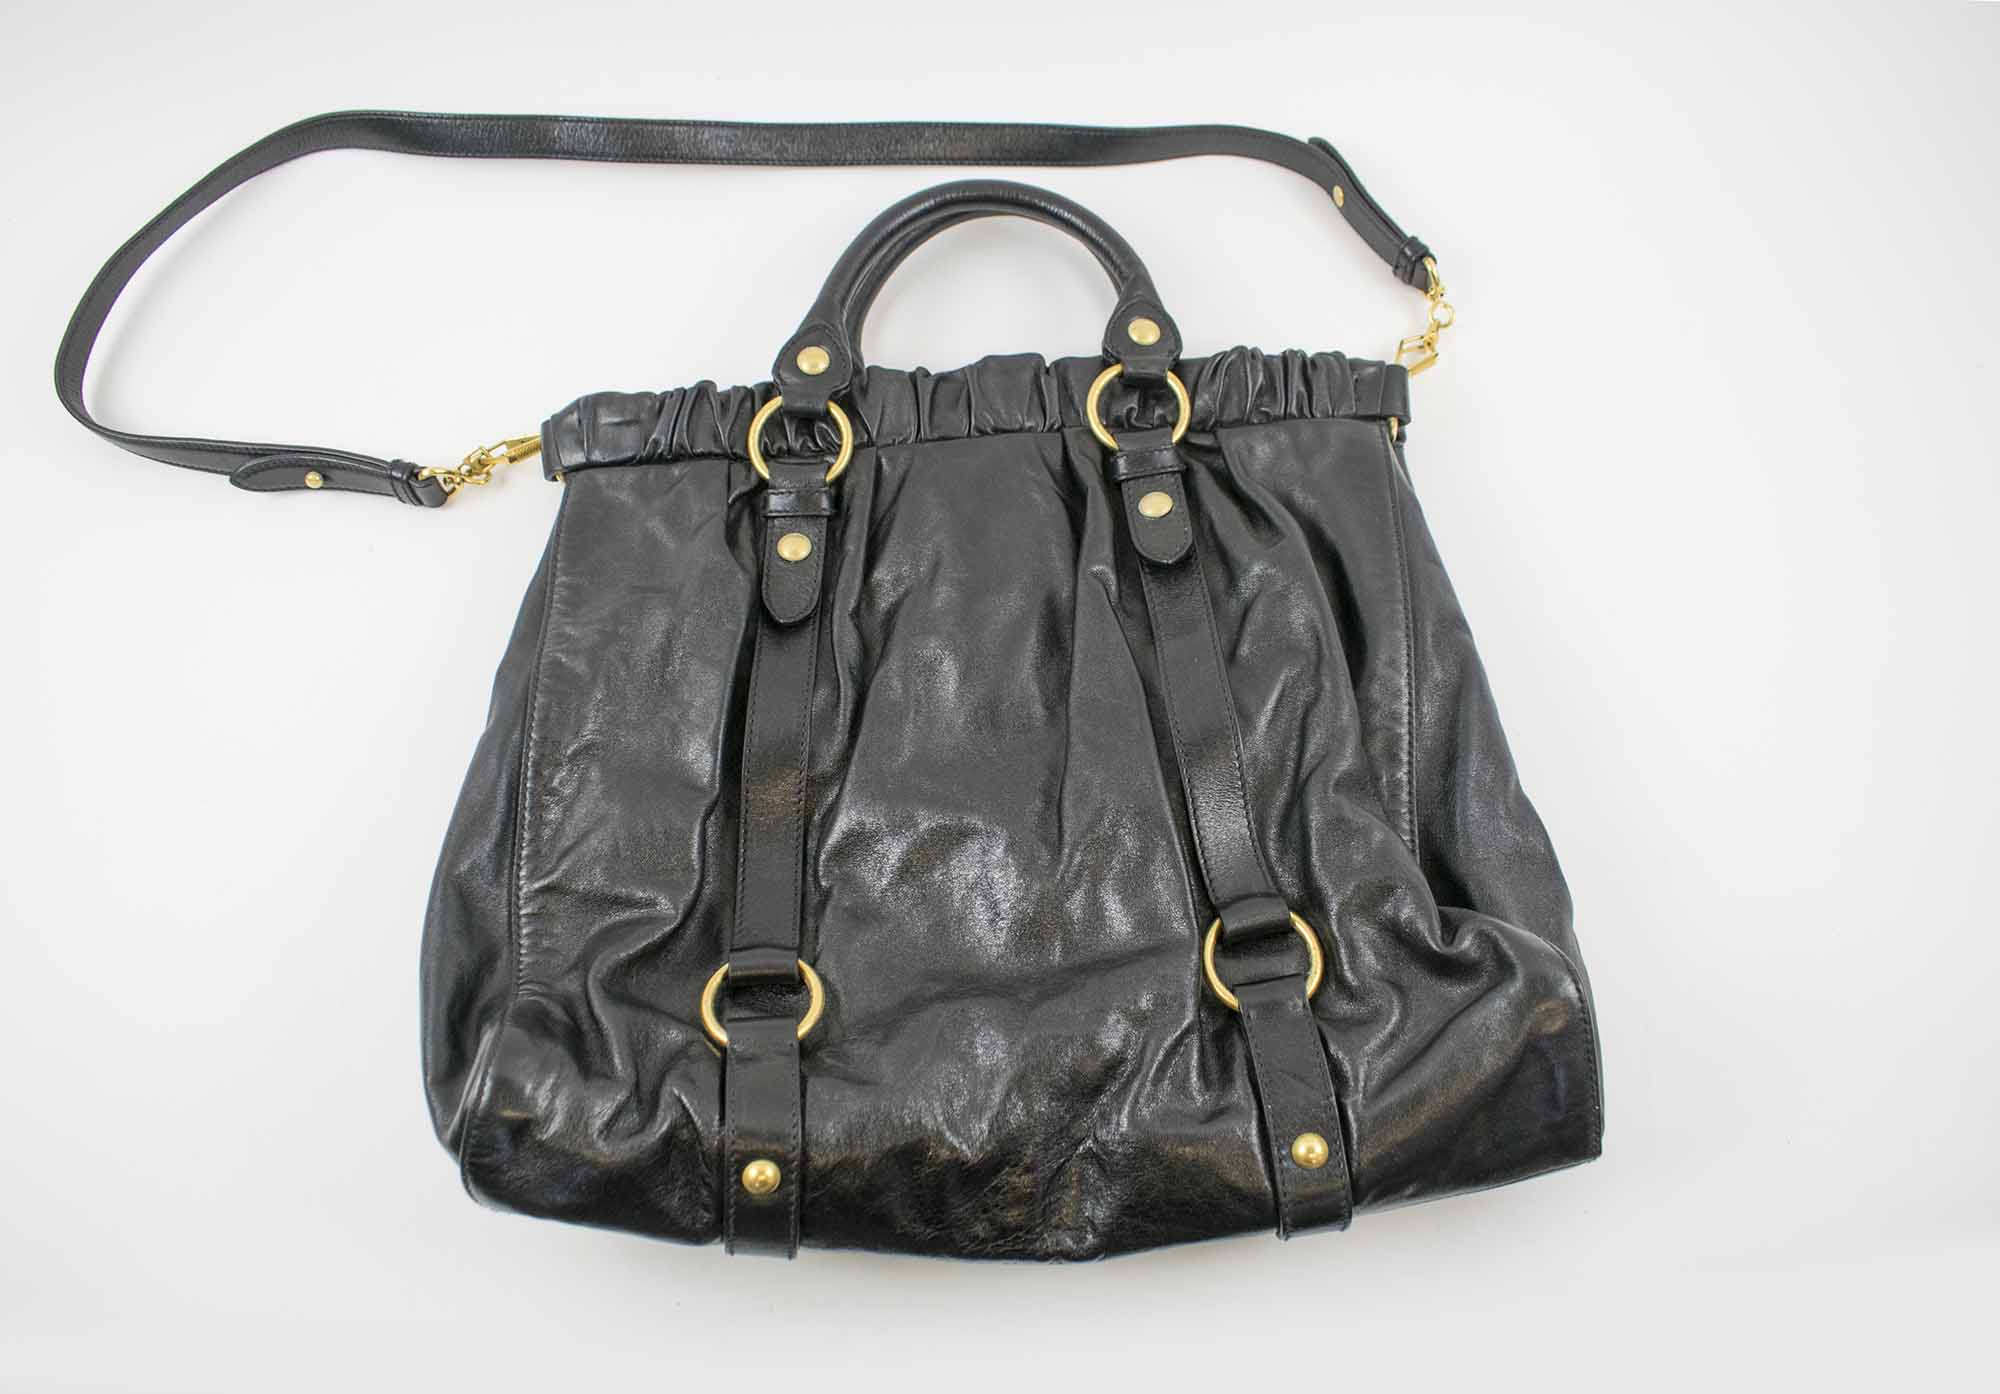 Miu Miu Vitello Lux Large Tote Black Leather Shoulder Bag Handbag